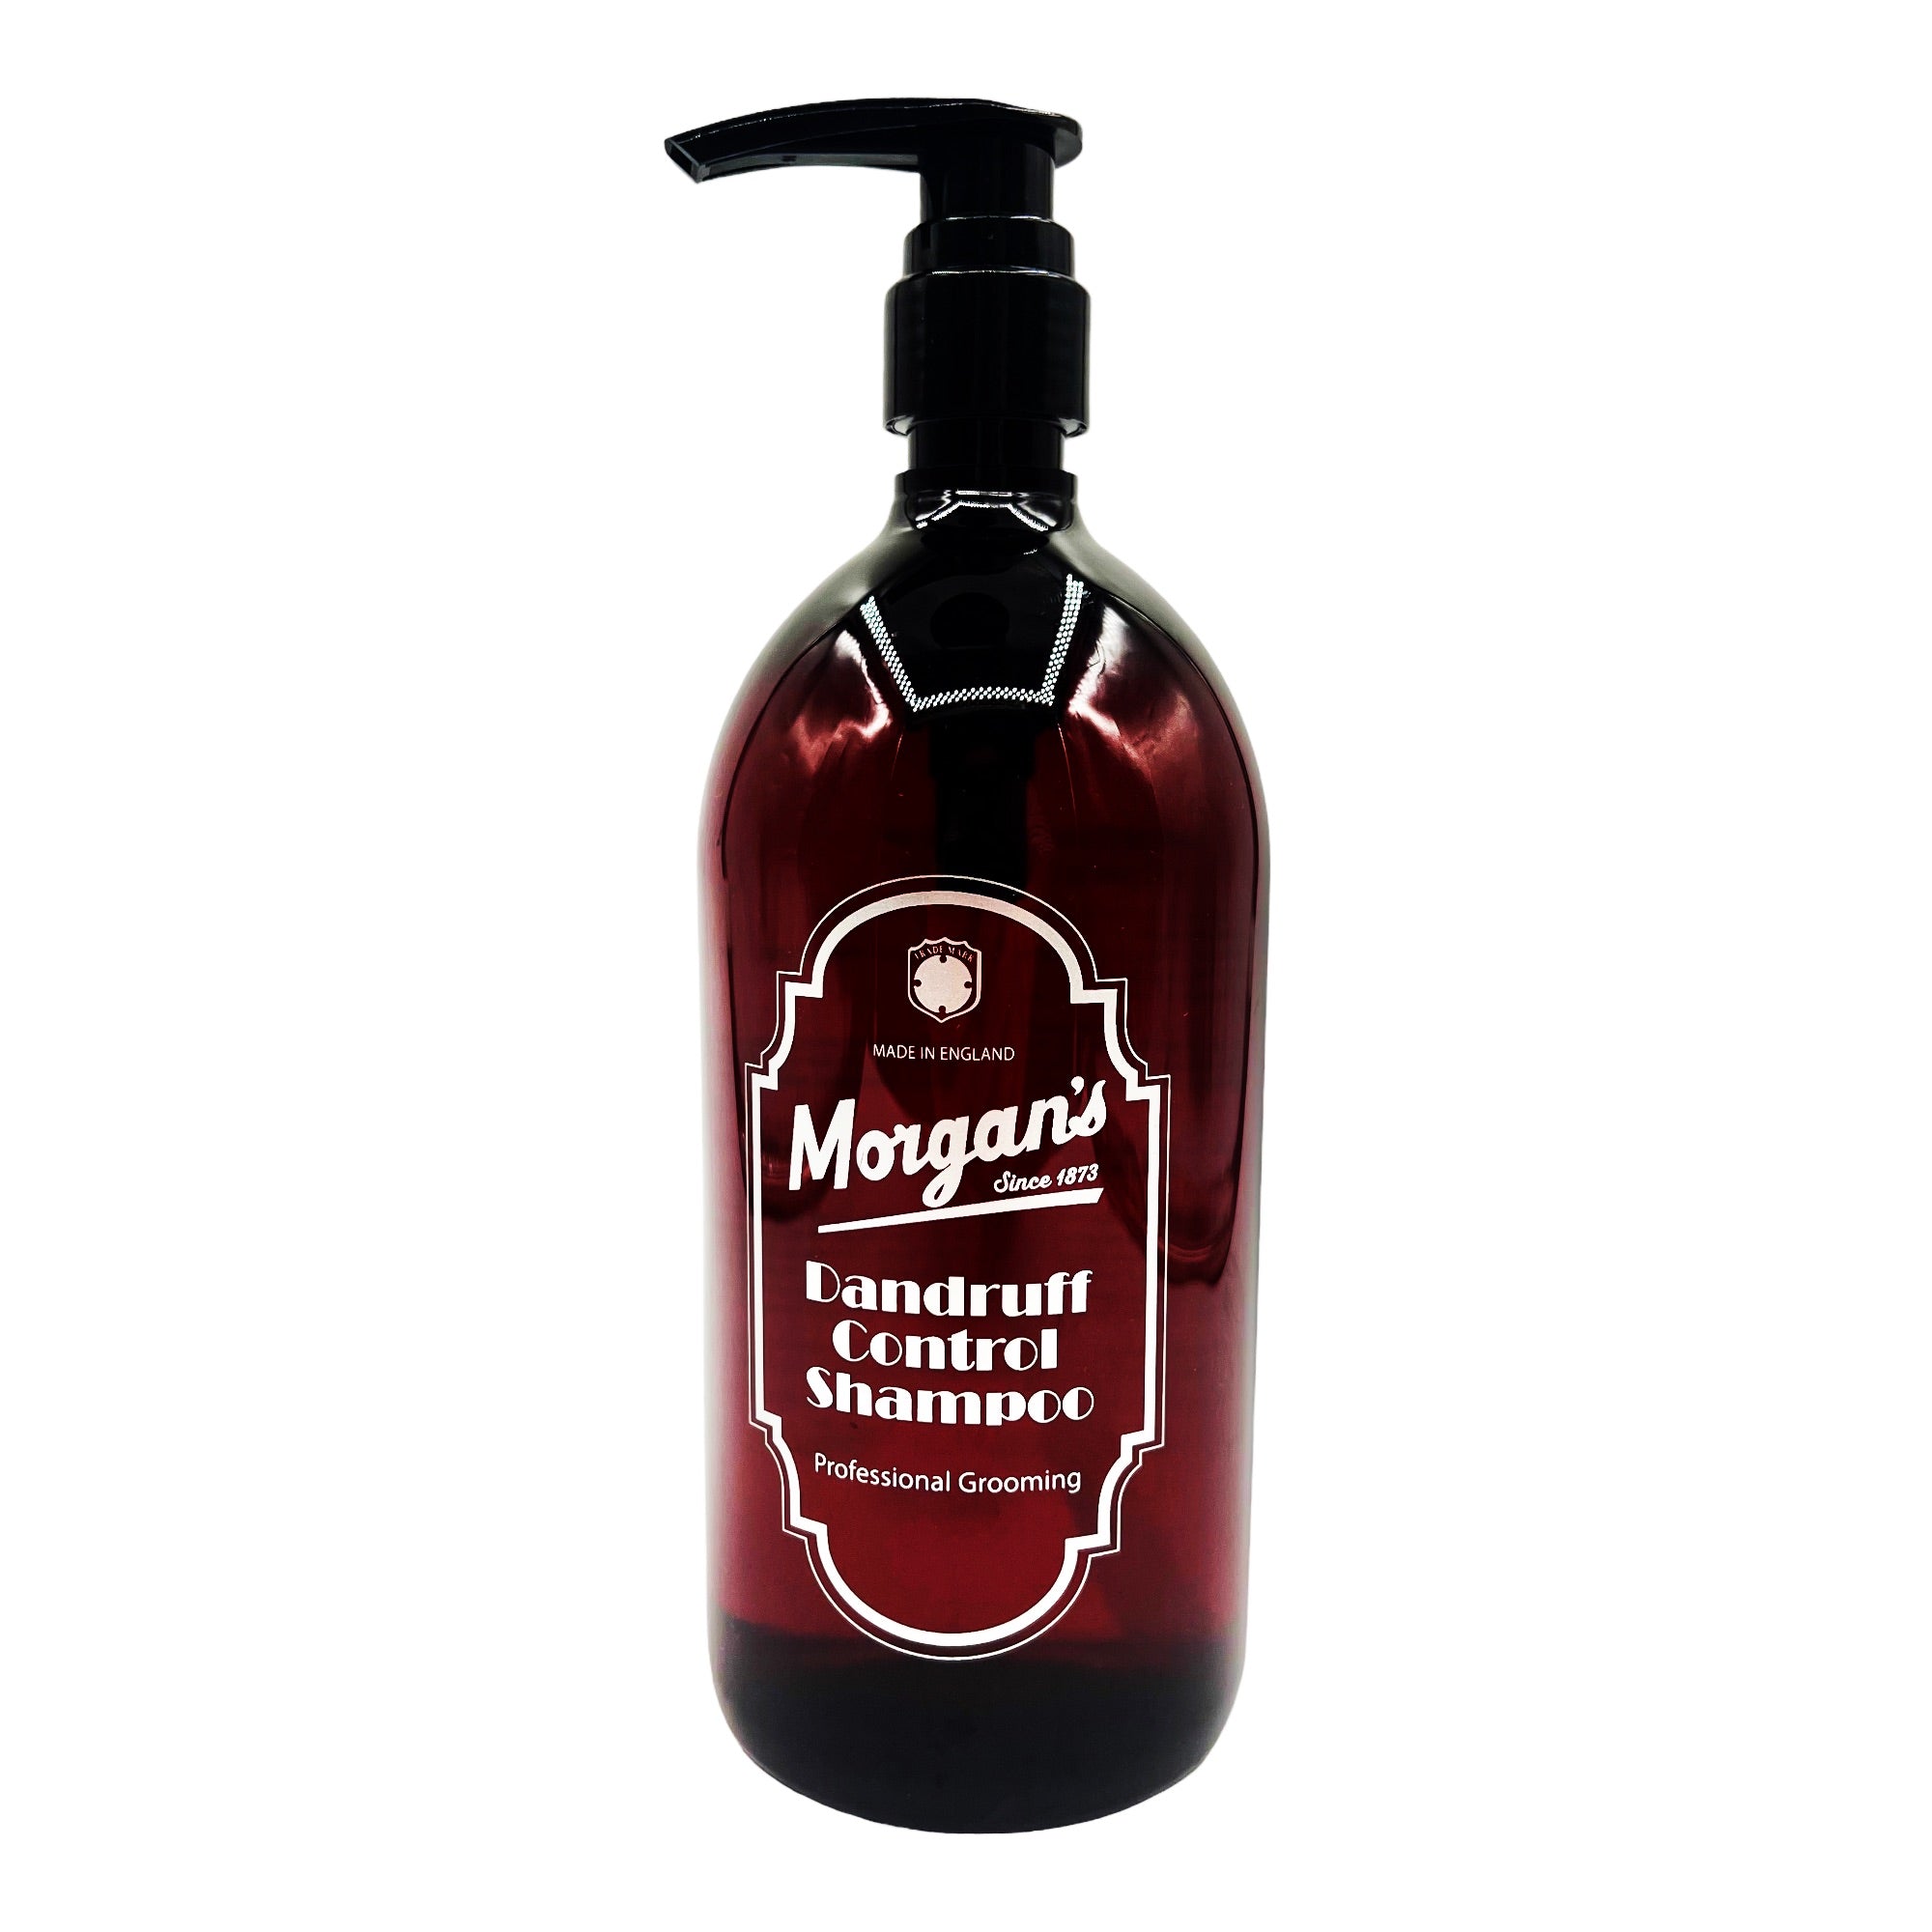 Morgan's - Dandruff Control Shampoo 1000ml